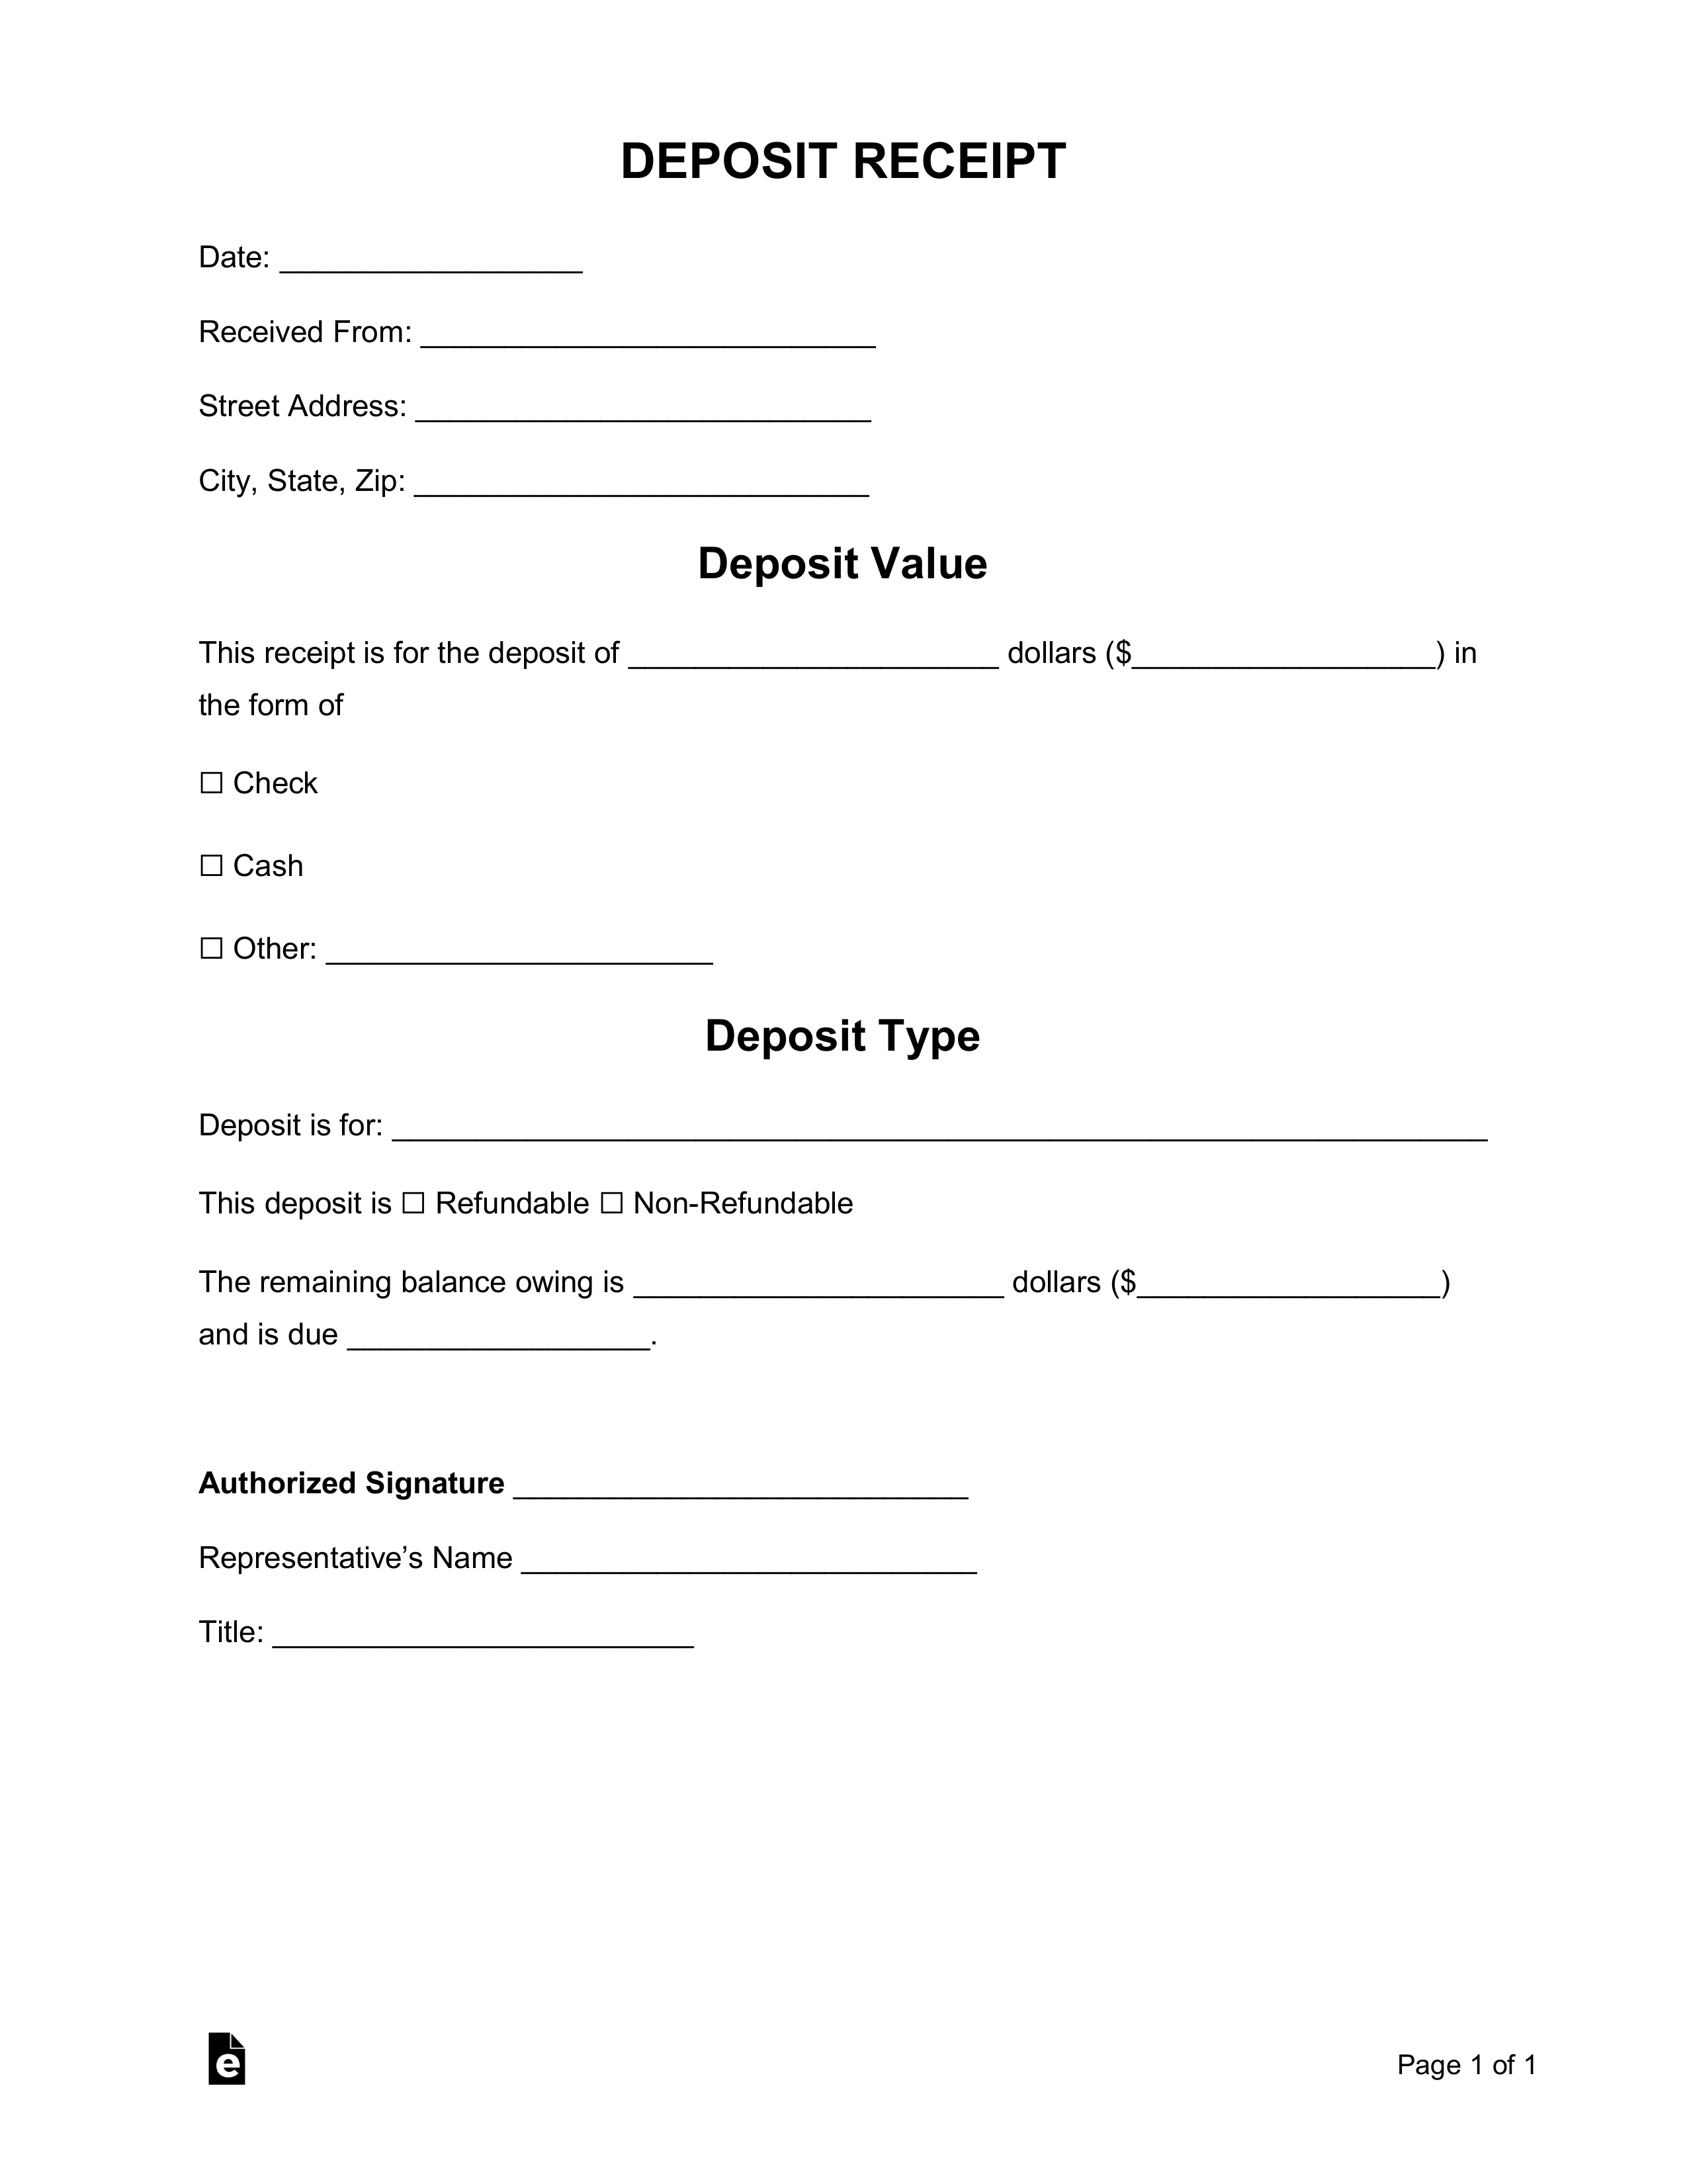 Free Deposit Receipt Templates - Word  PDF – eForms In Deposit Slip Form Template Inside Deposit Slip Form Template